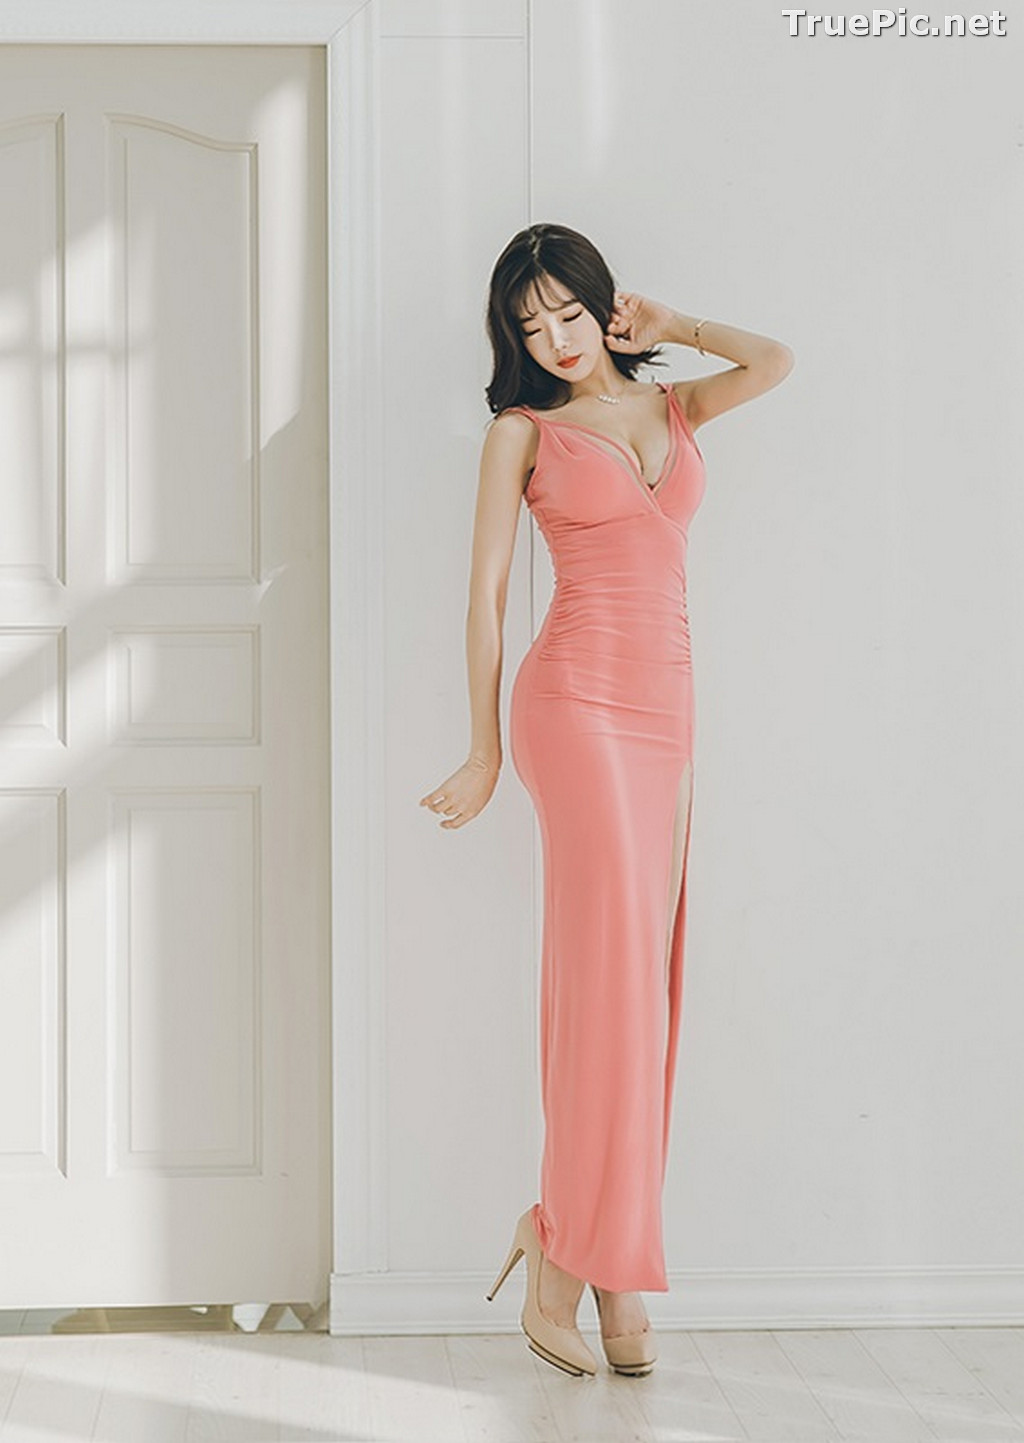 Image Korean Fashion Model - Kang Eun Wook - Slim Fit Bodycon Dress - TruePic.net - Picture-21